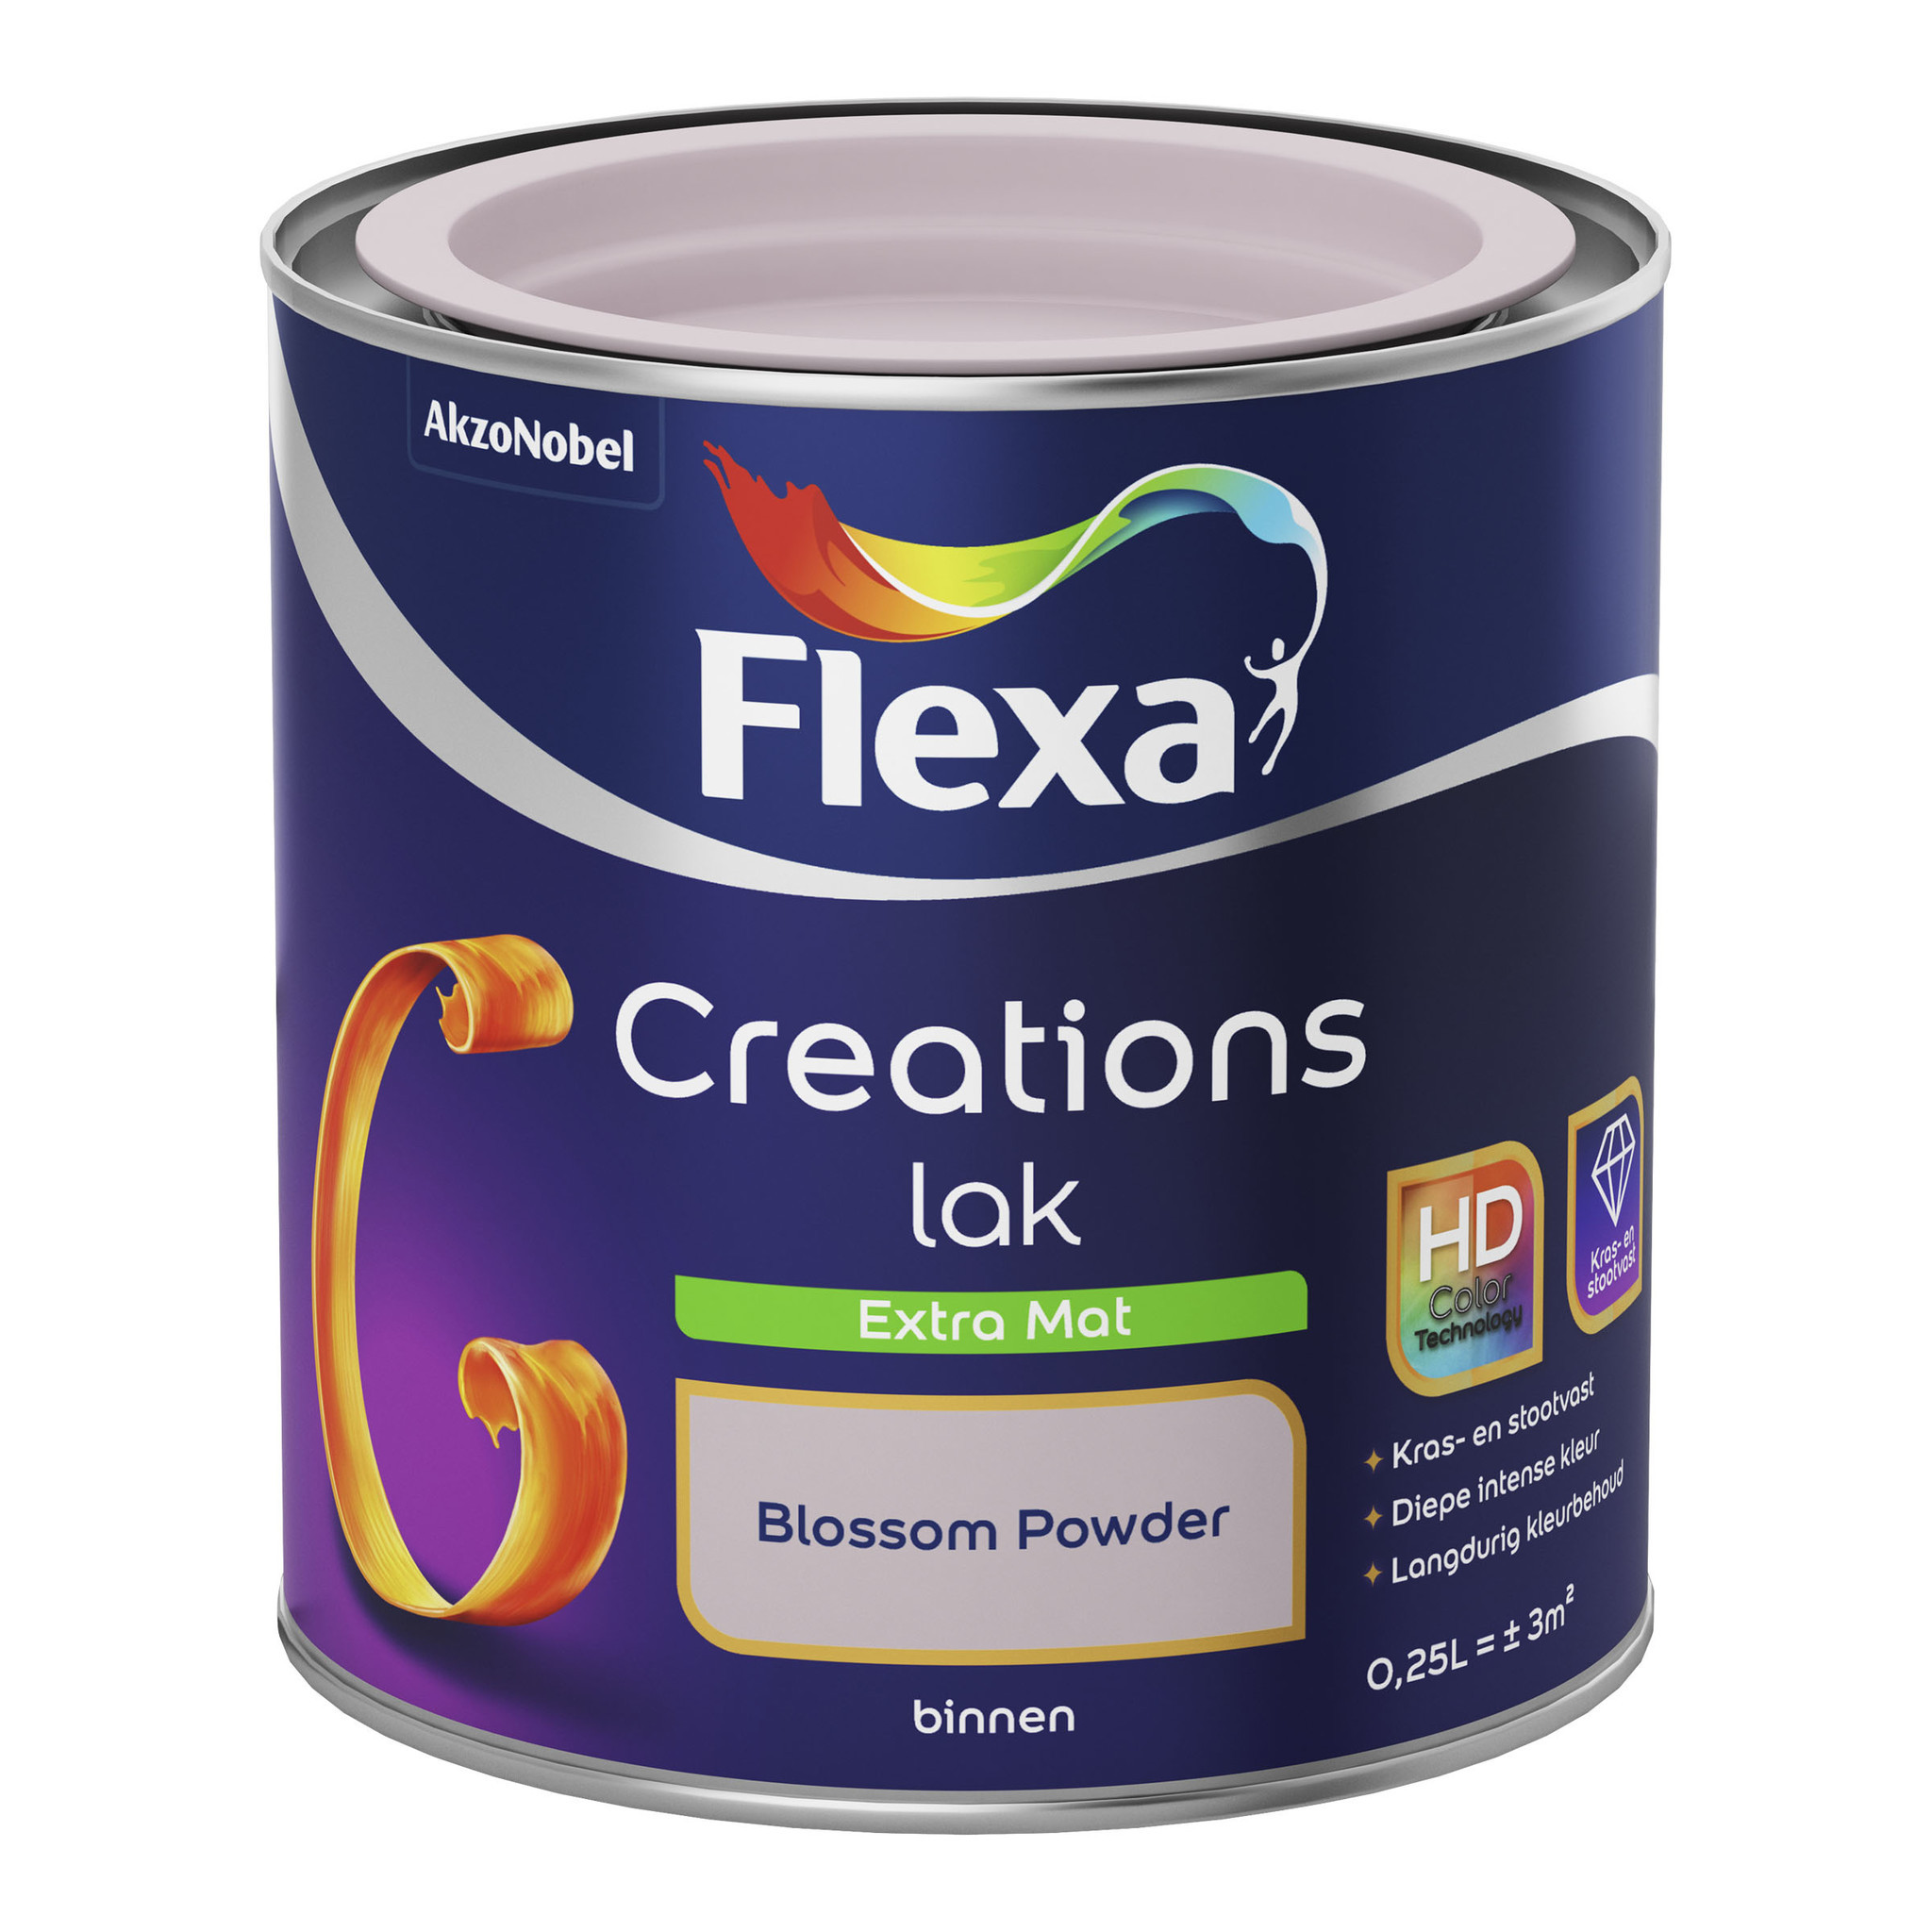 Flexa Creations Lak Extra Mat - Blossom Powder